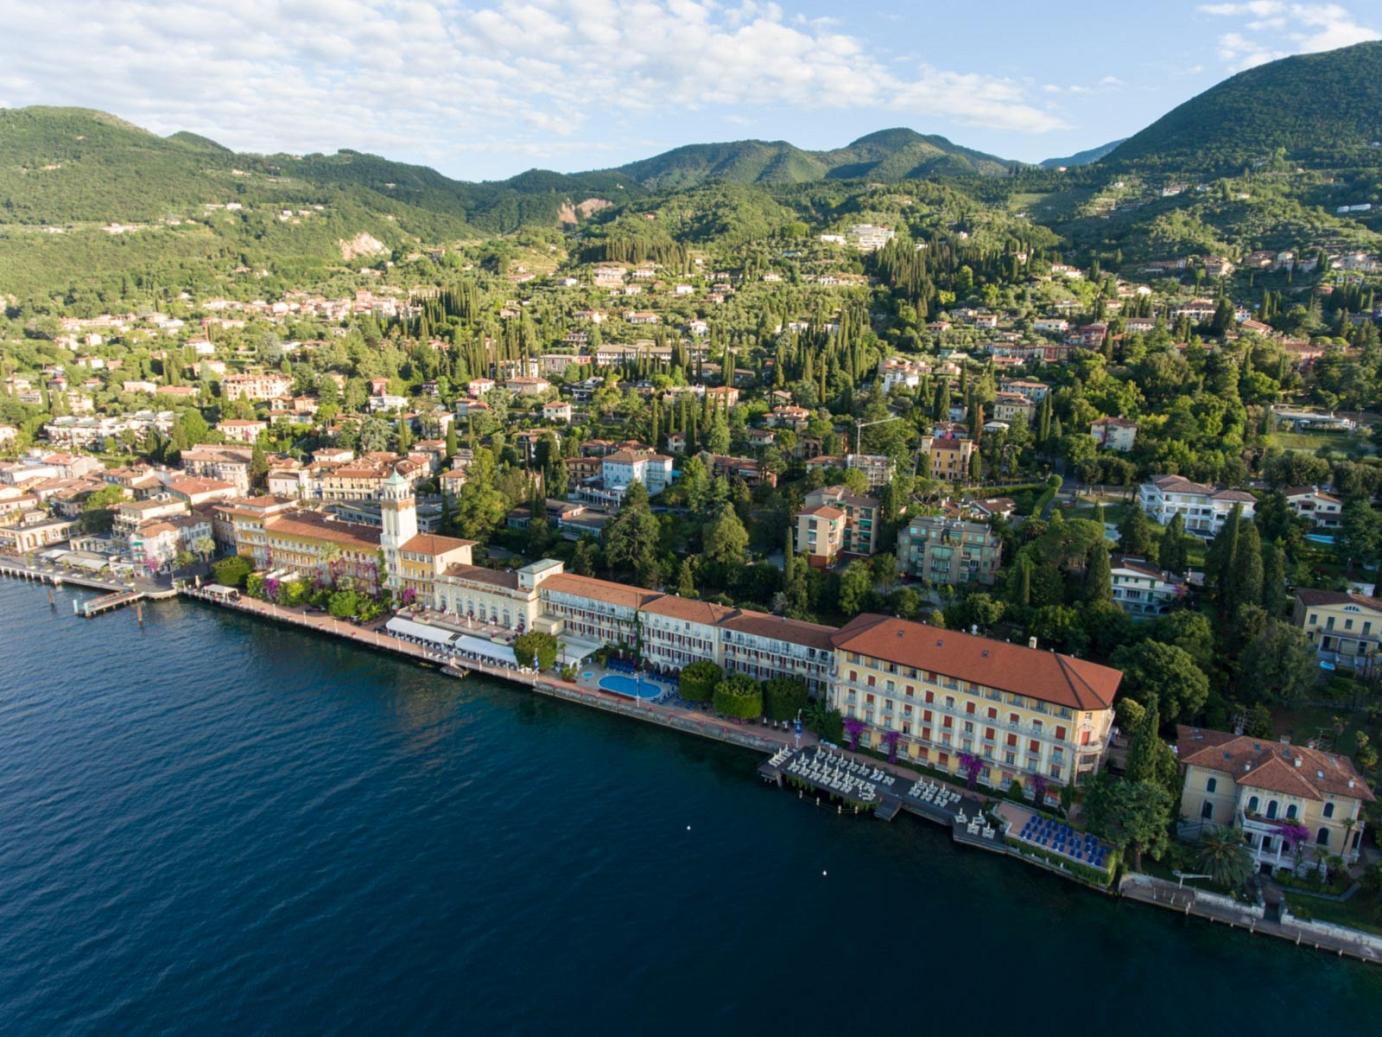 Bocchio Solutions - Hotel Gardone<br>Restructuring Hotel on Lake Garda